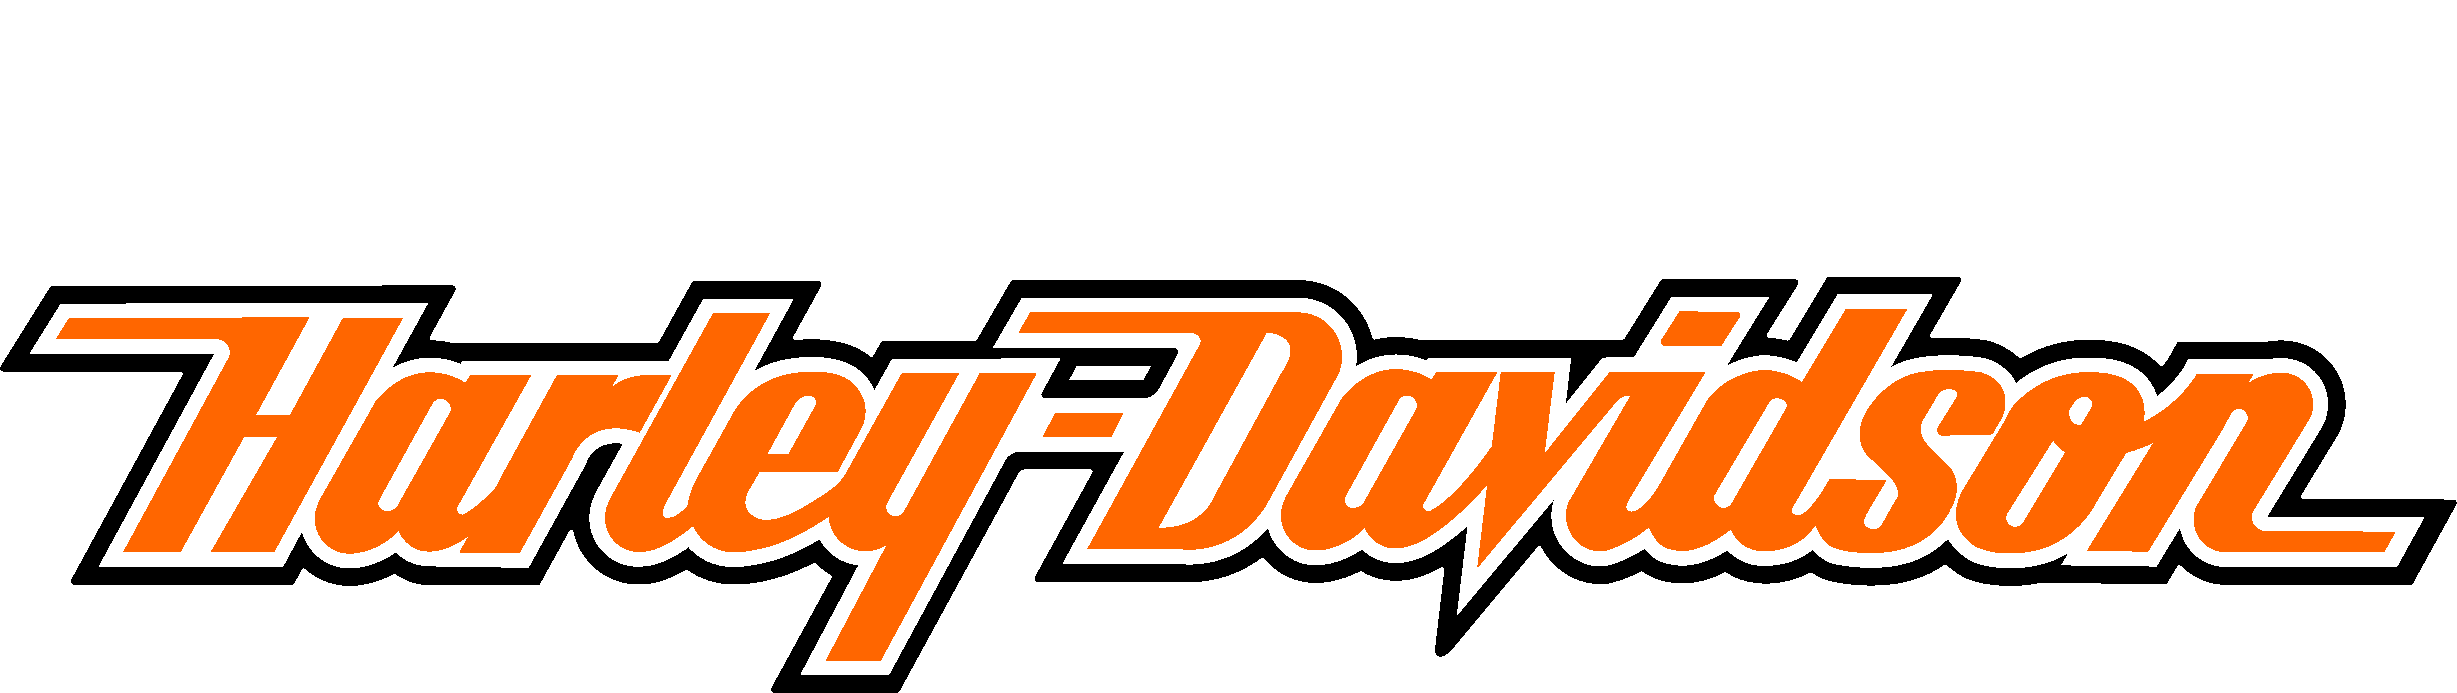 Southwest Harley Davidson Australia Logo PNG